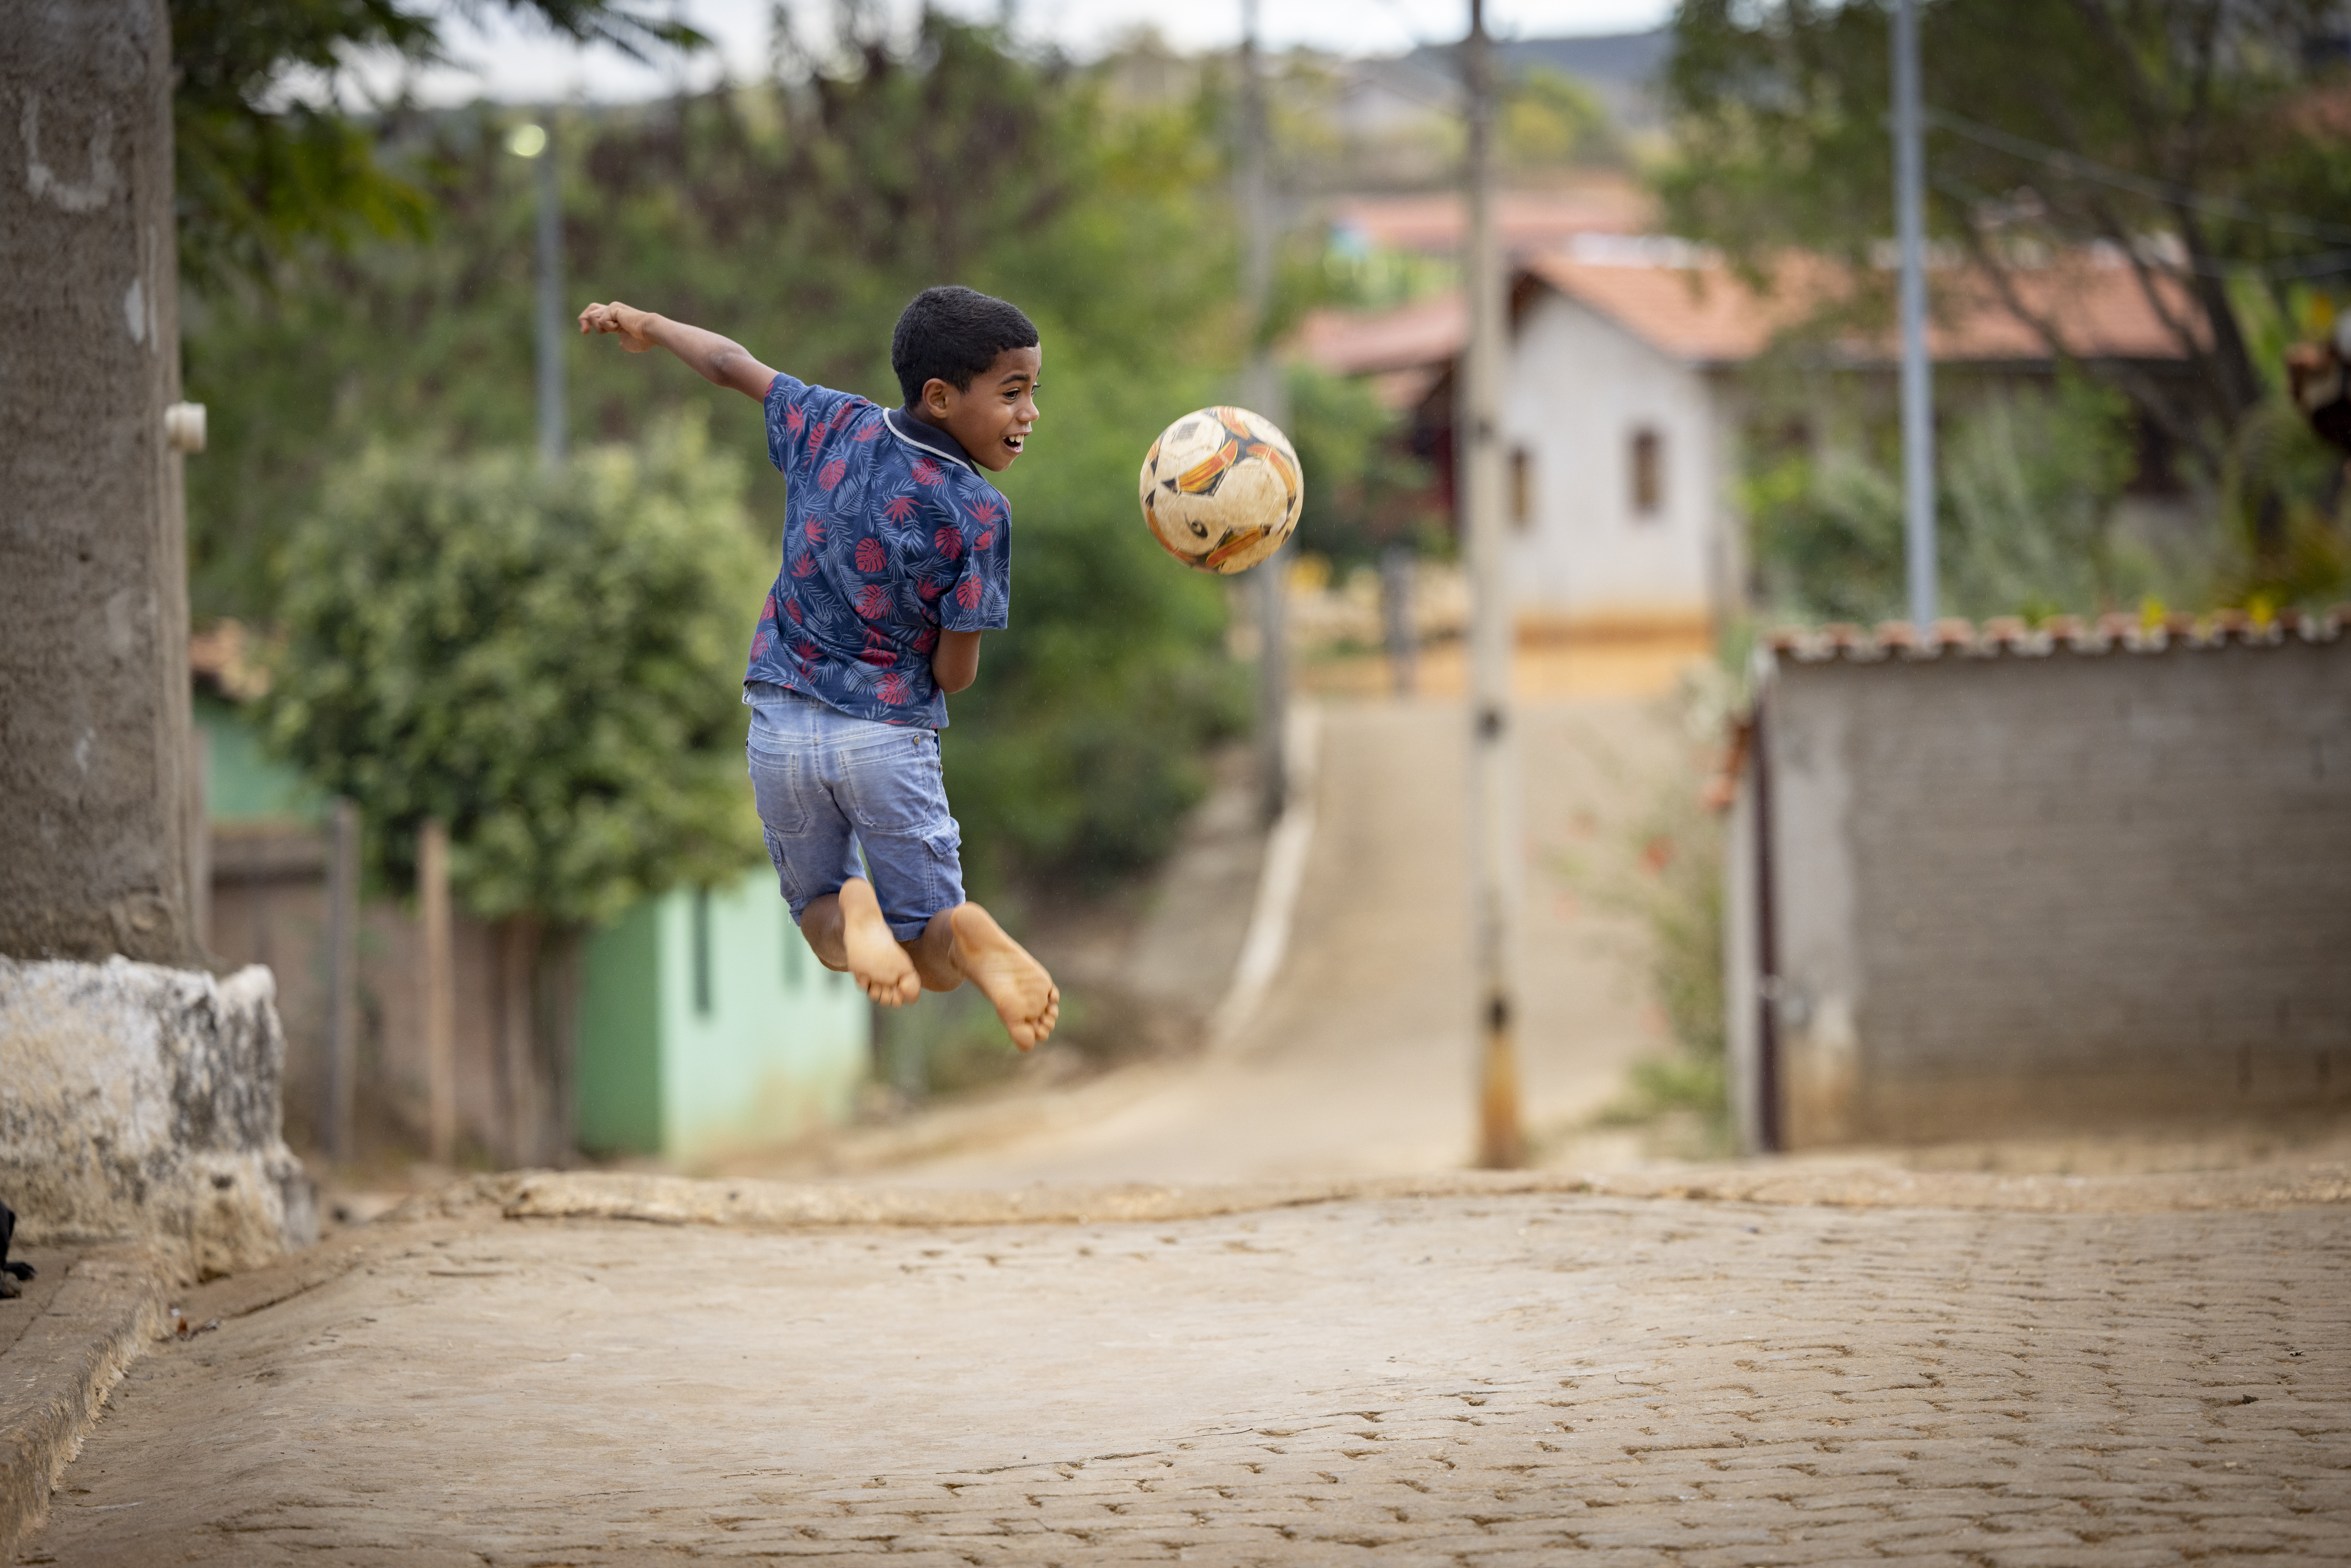 ChildFund Brasil contribui para lei que institui infância segura